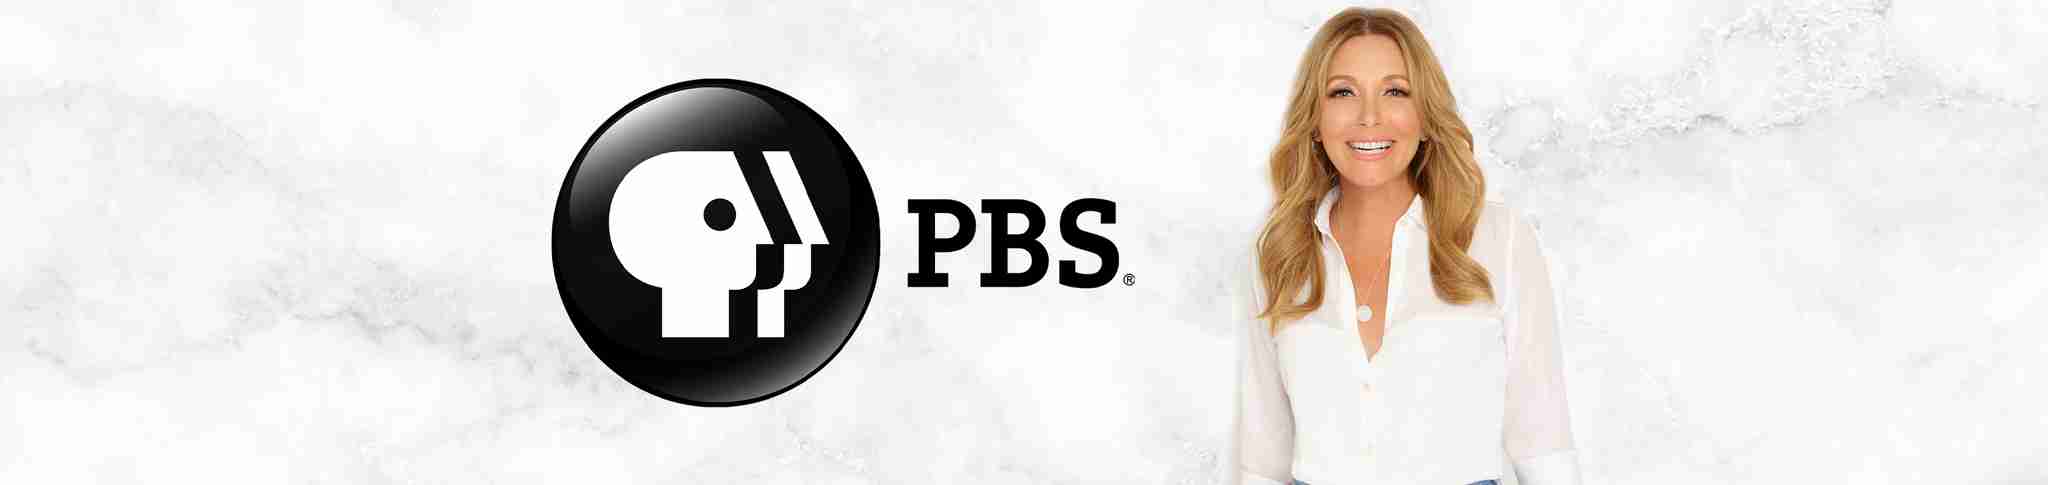 Dr. Kellyann con logo PBS